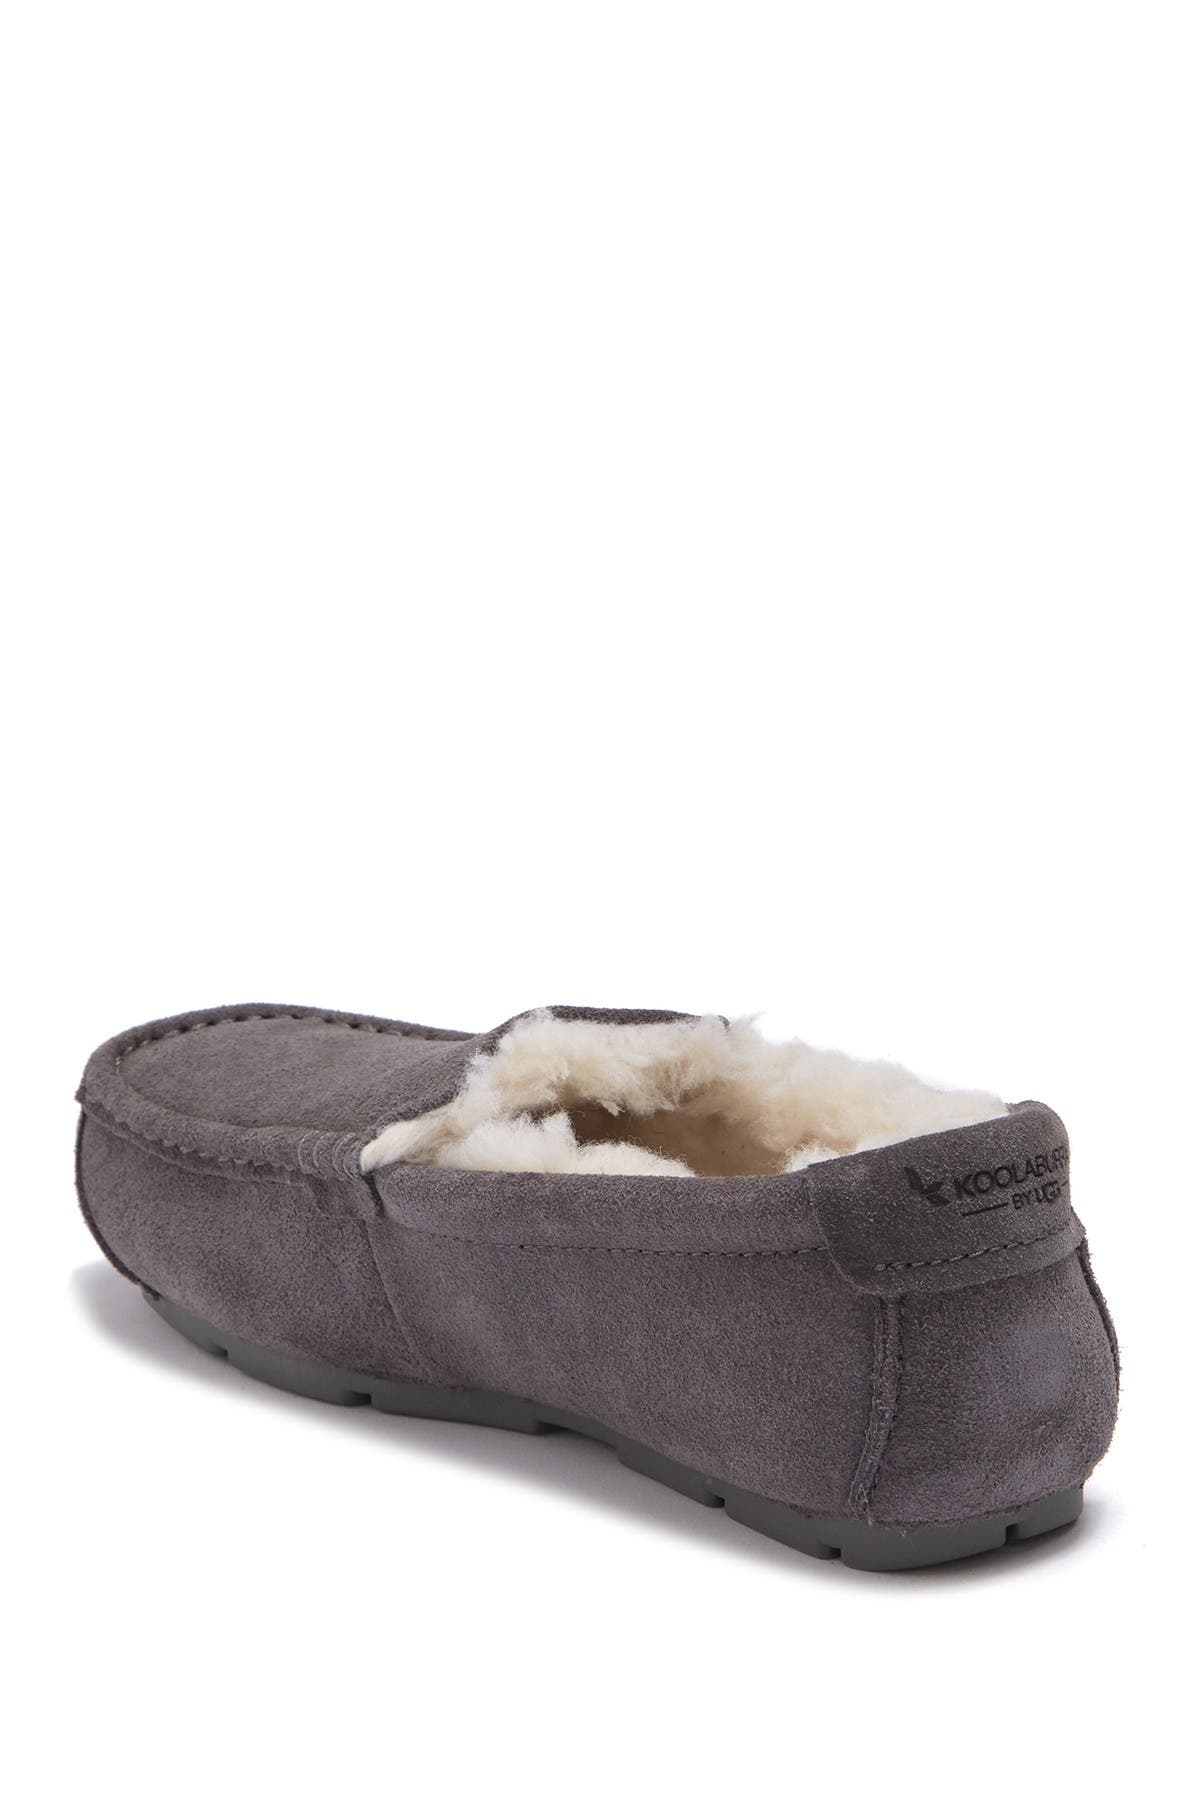 koolaburra mens slippers